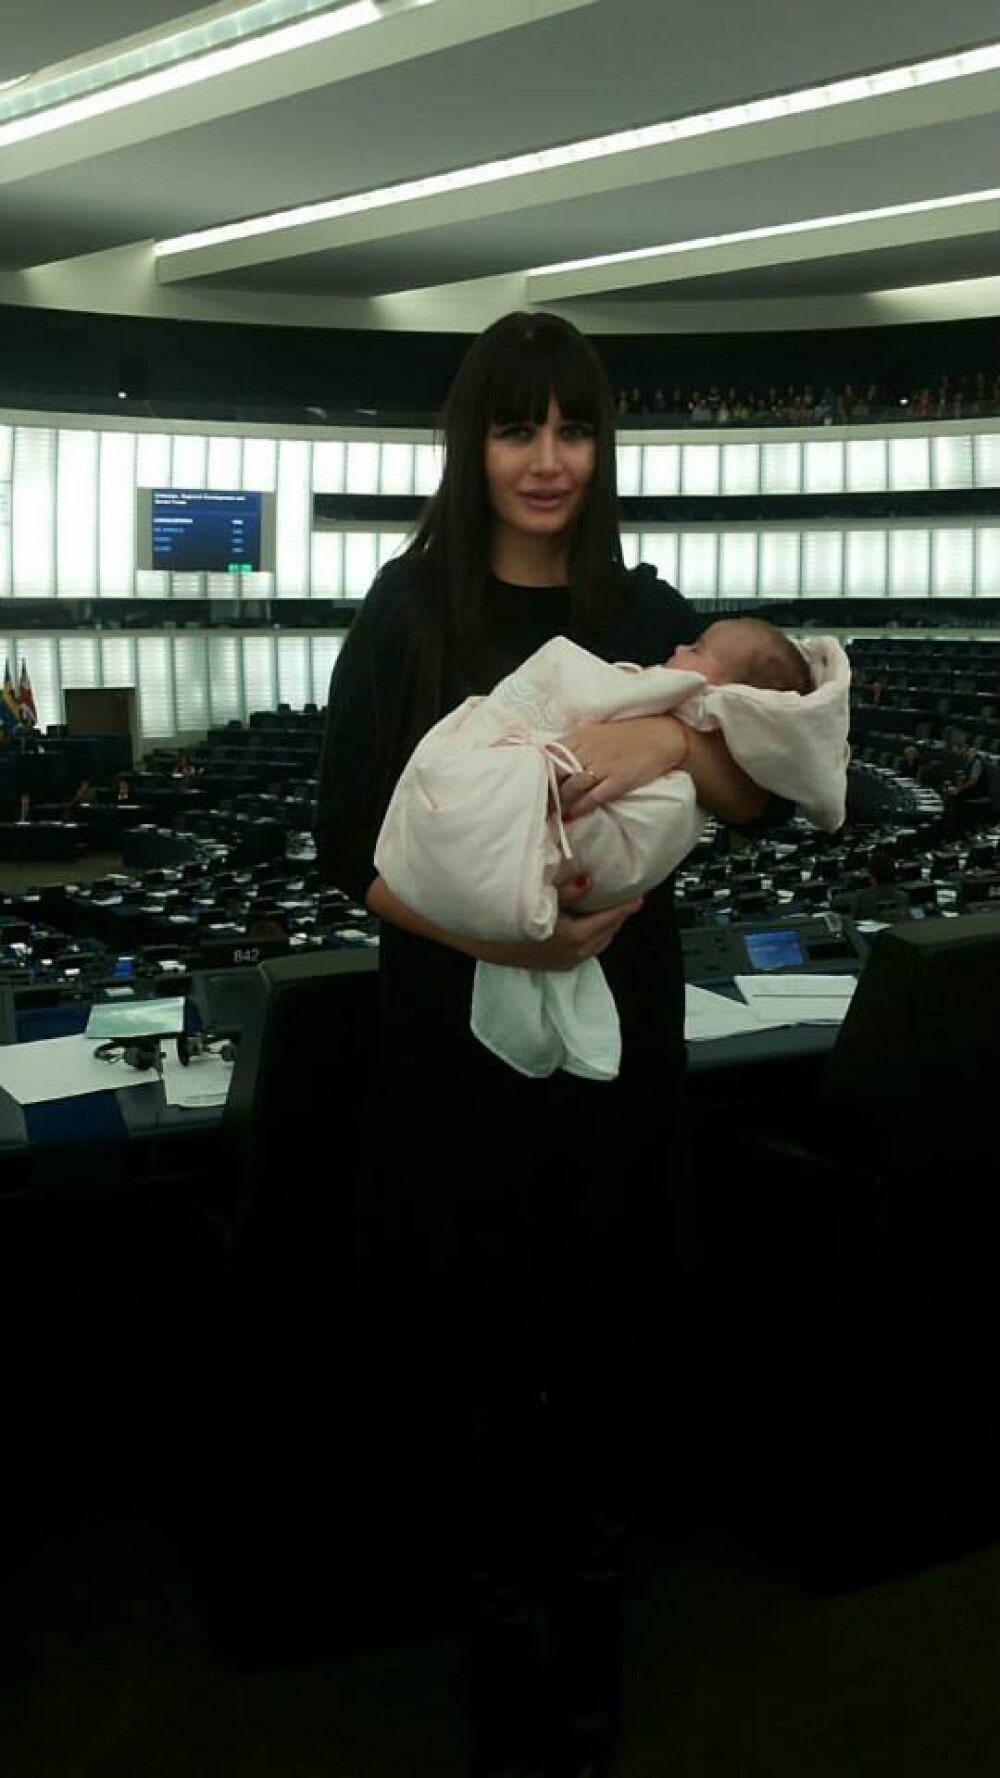 Elena Basescu s-a intors la munca, dupa doar 2 luni. A adus-o pe Sofia in Parlamentul European. FOTO - Imaginea 2